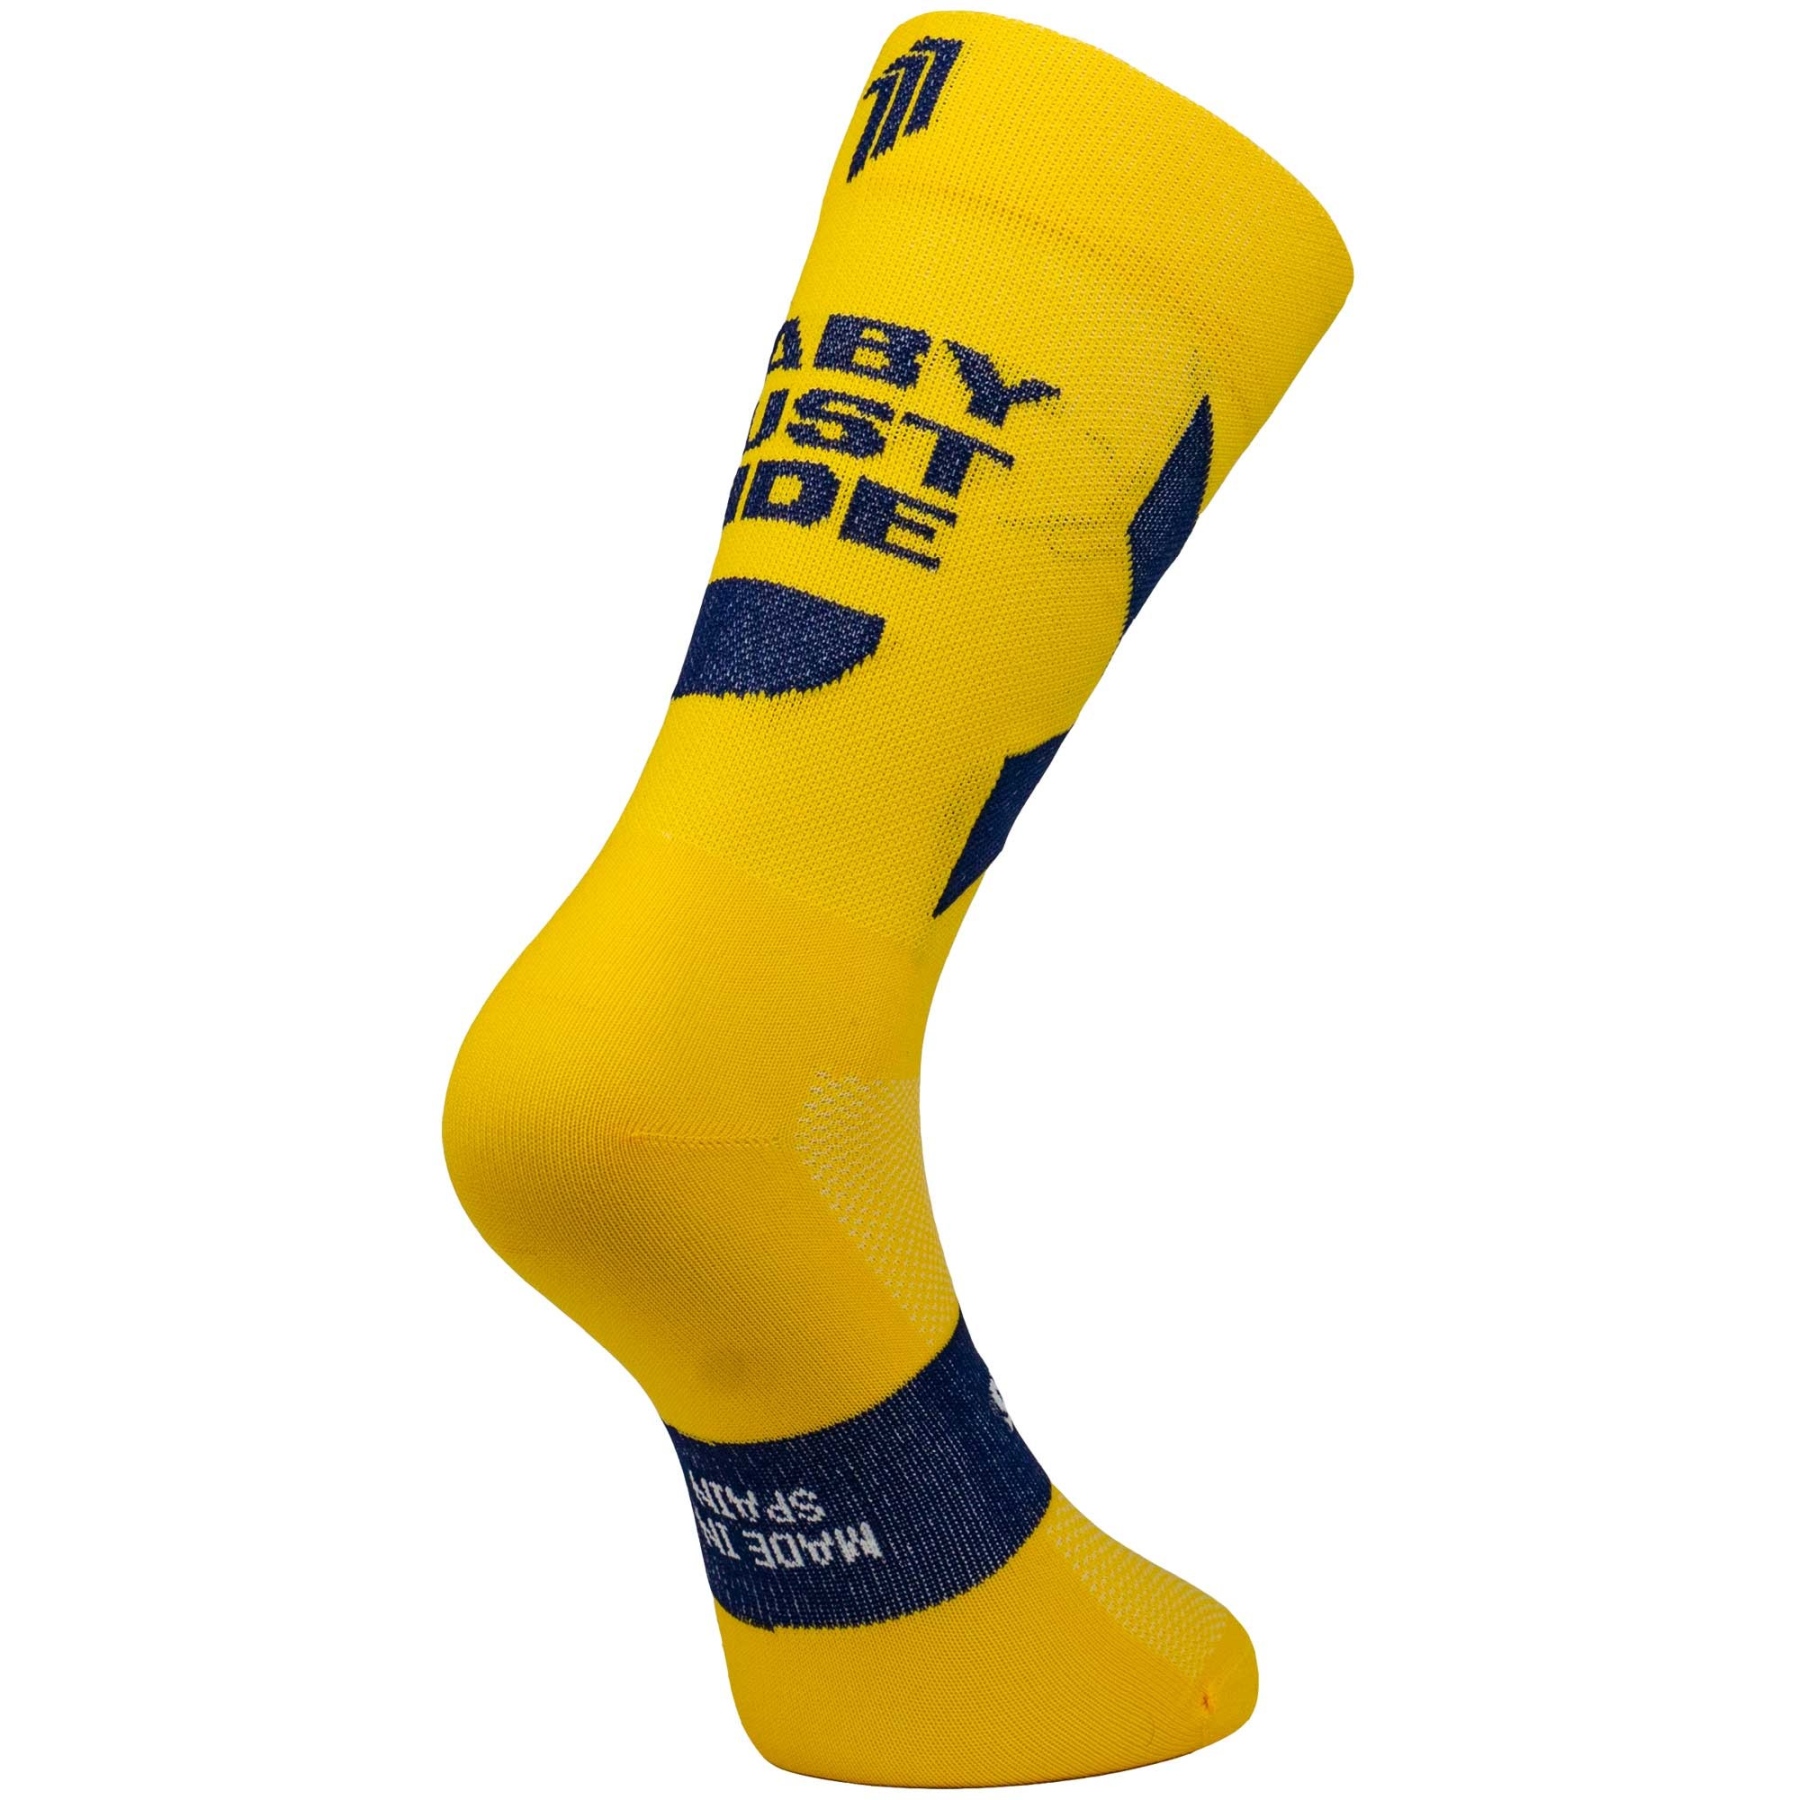 Produktbild von SPORCKS Cycling Socken - Baby JR Yellow